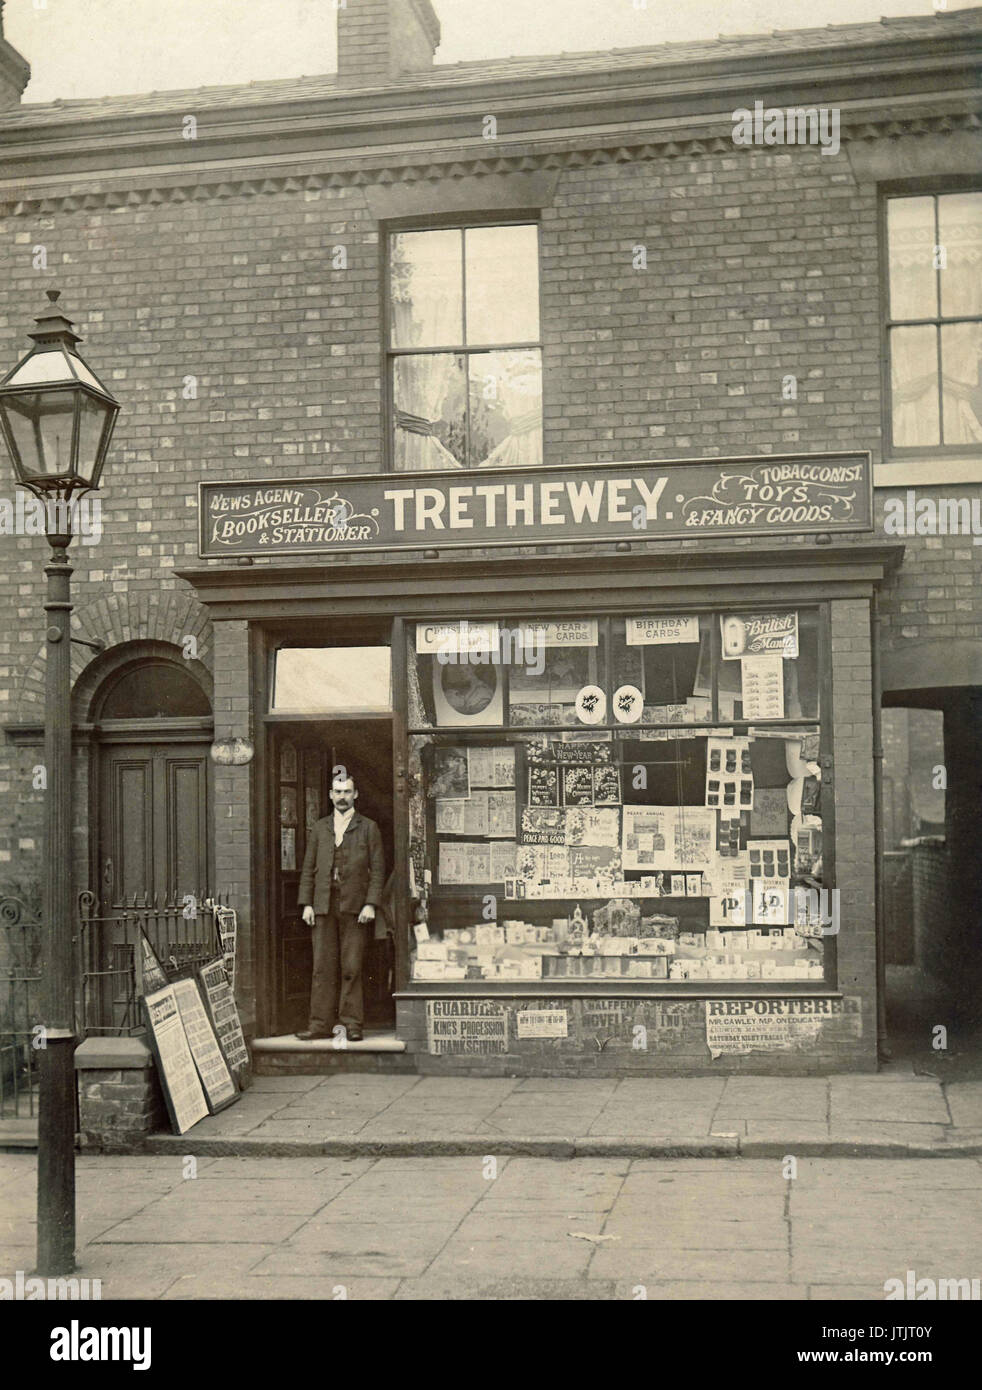 Edwardian shopfront, Newsagent, tobacconist, Merseyside, historic archive photograph Stock Photo